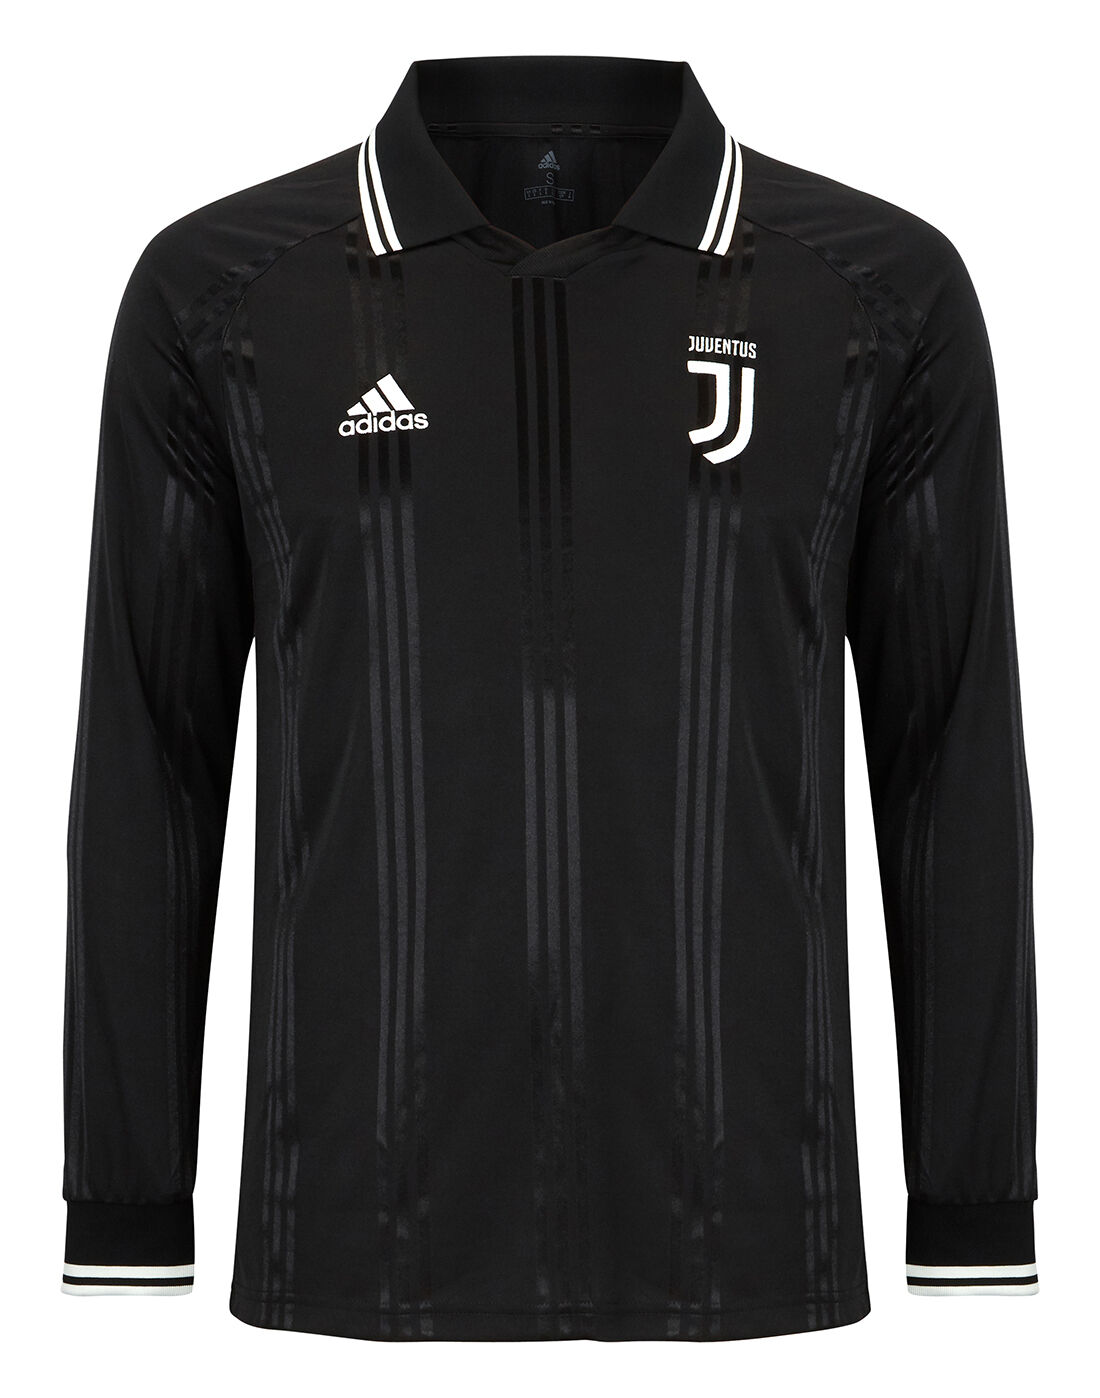 Juventus Retro Jersey | Life Style Sports